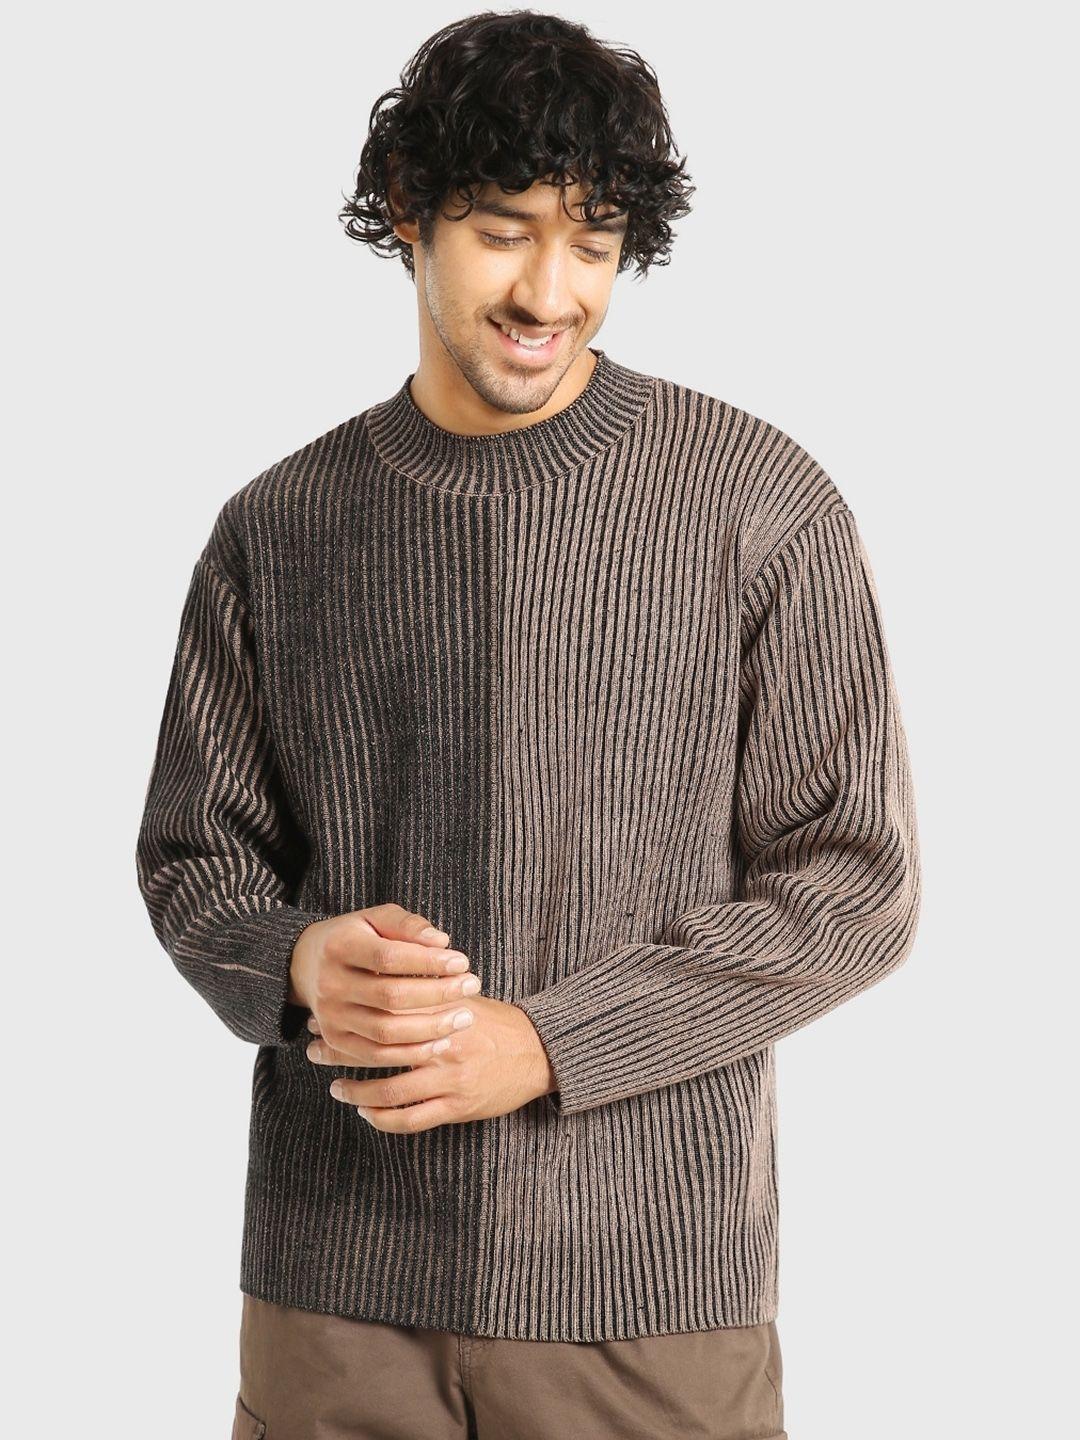 bewakoof-men-brown-striped-pullover